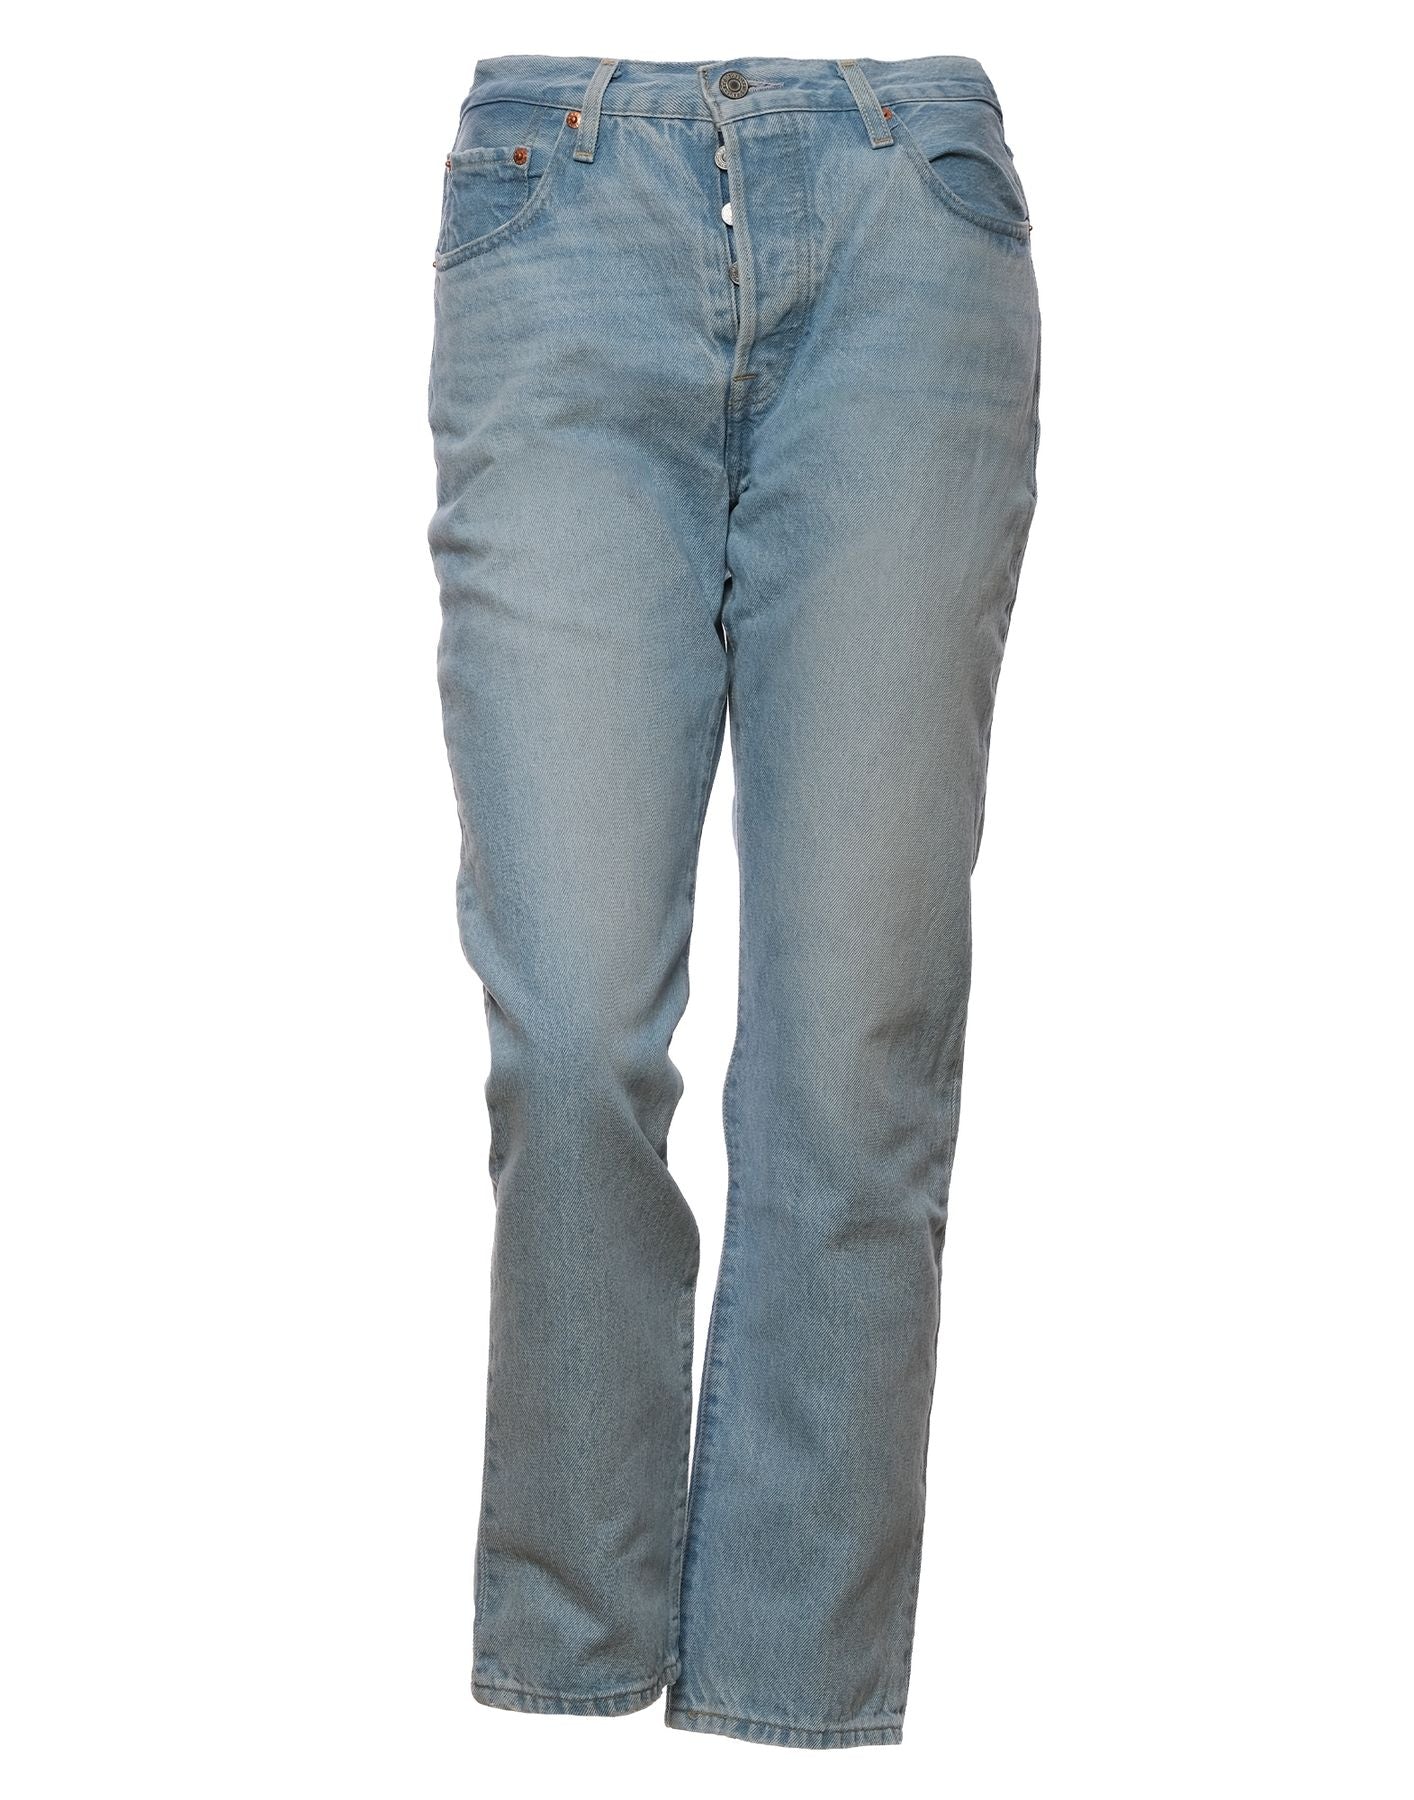 Jeans Woman 36200 0124 Ojai Luxor Levi's